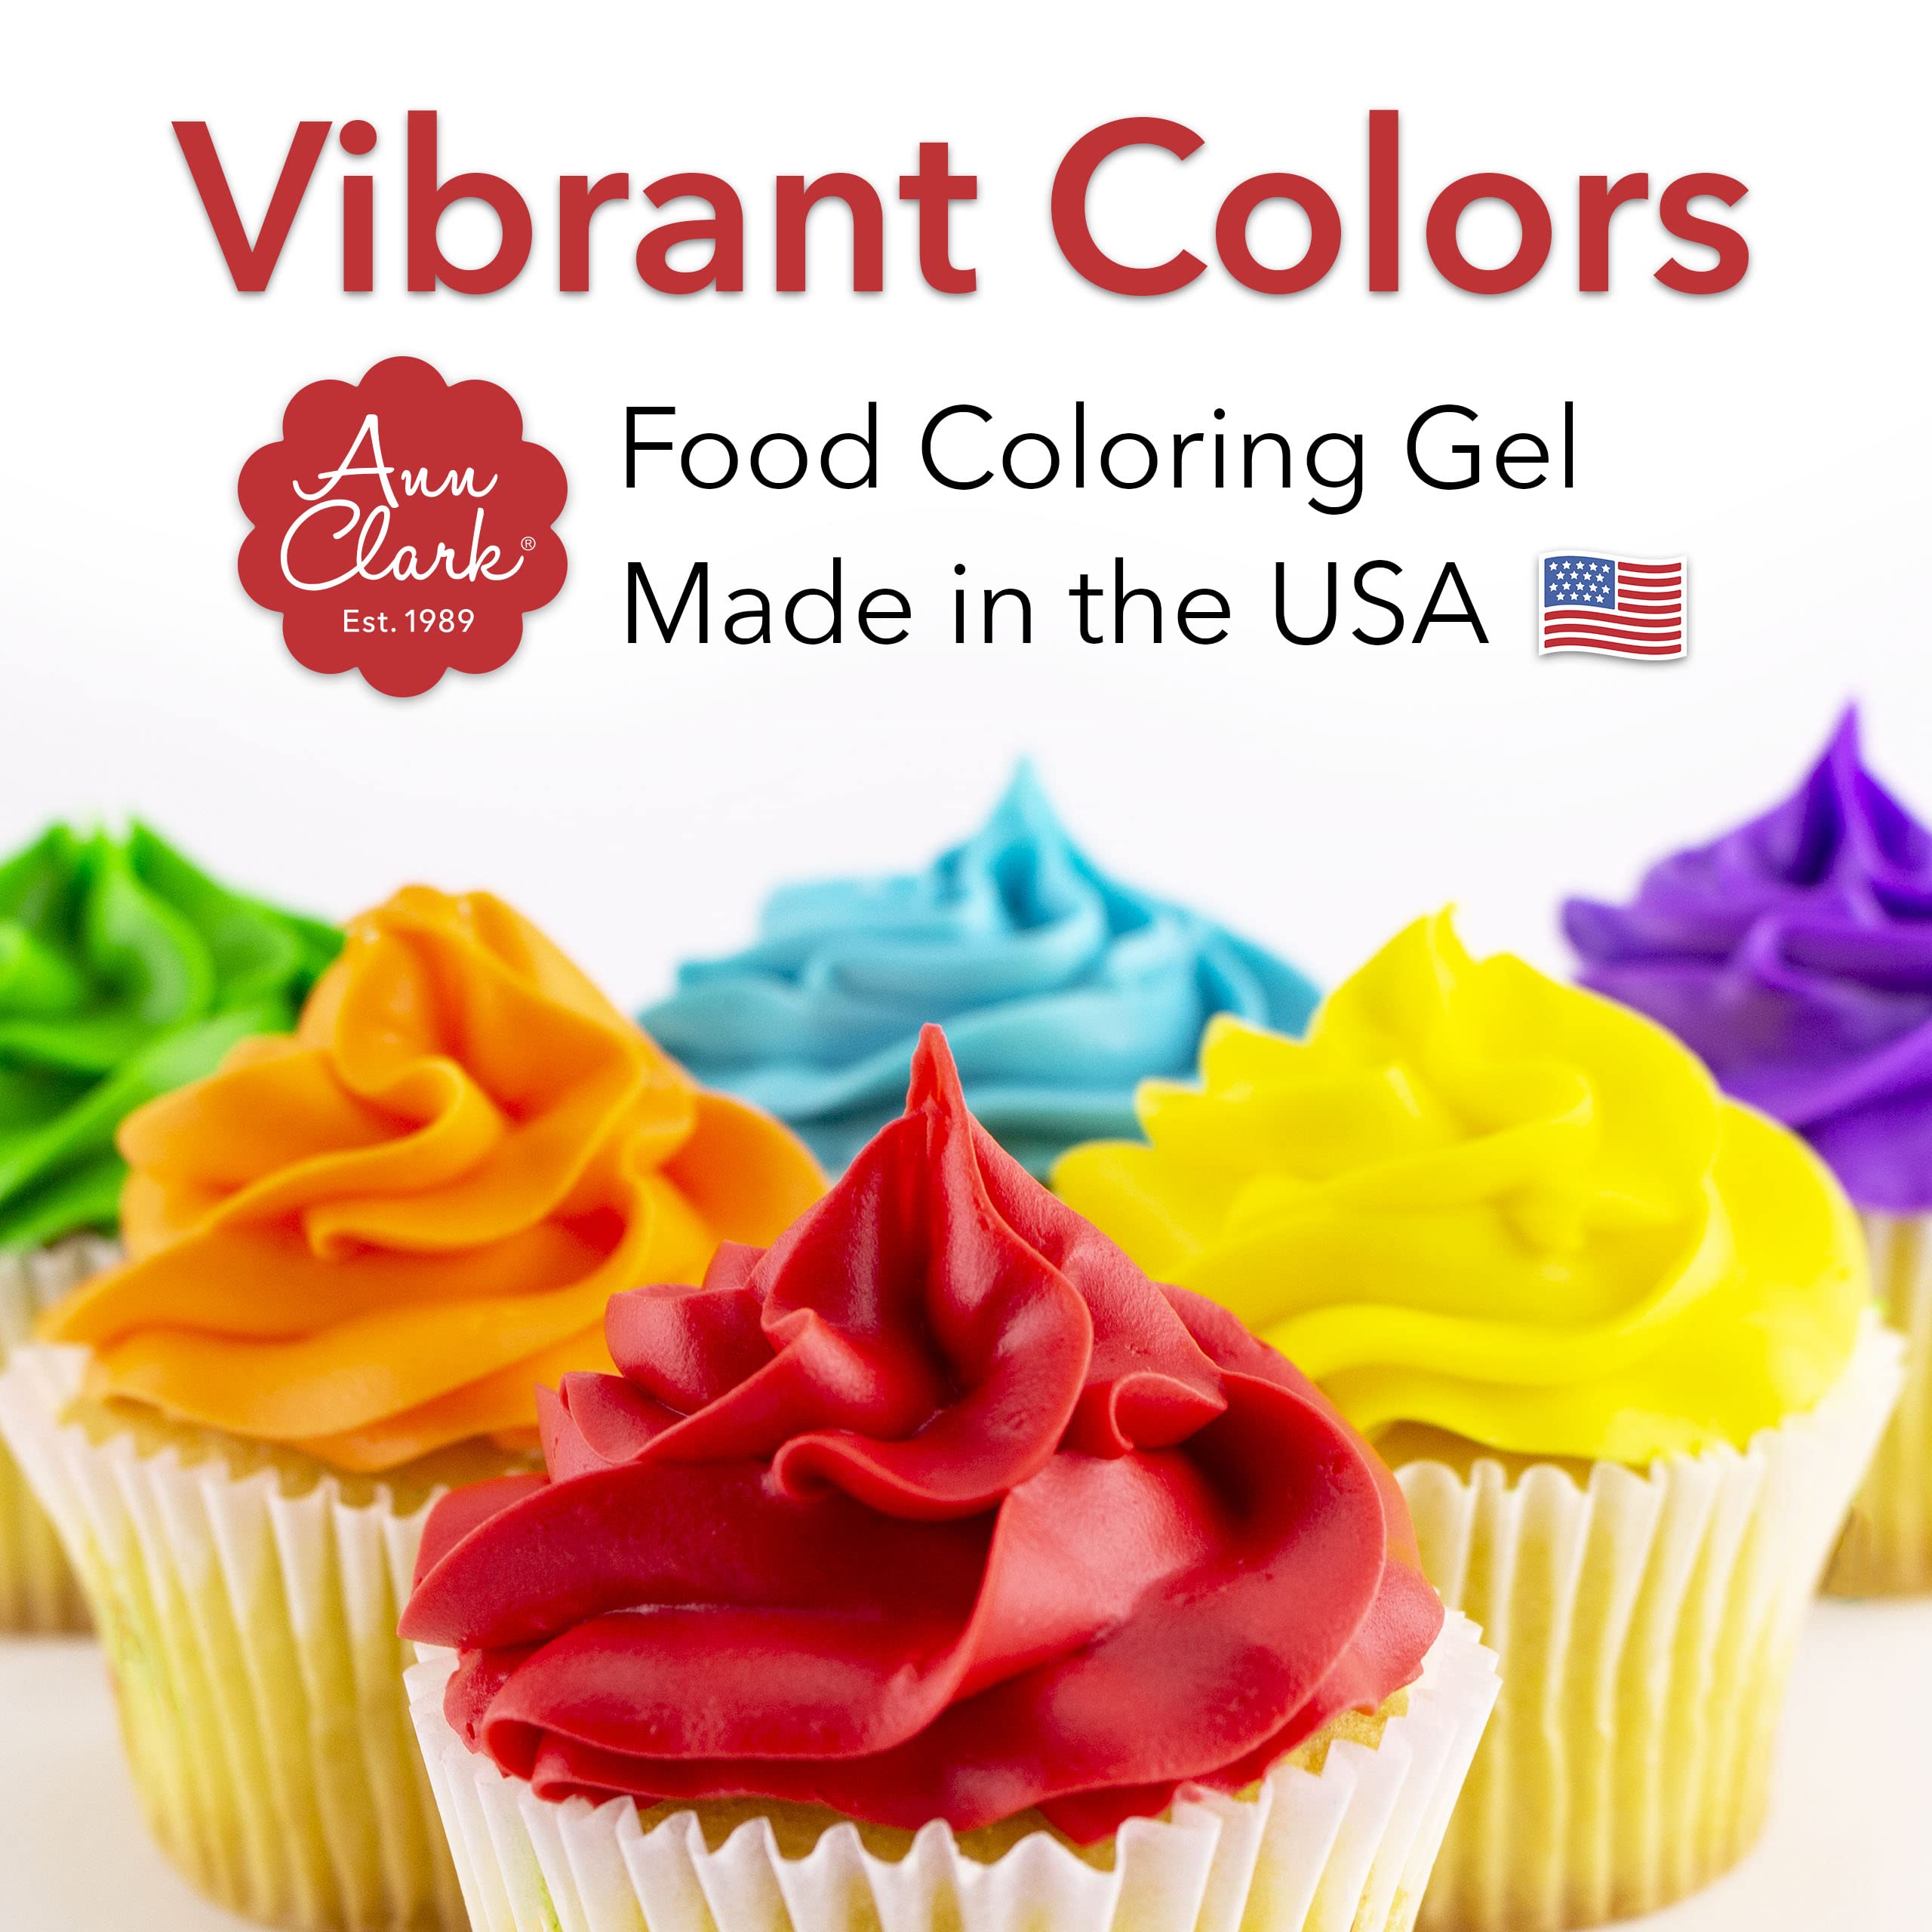 Ann Clark Regal Purple Food Coloring Gel .70 oz. Professional Grade Made in USA